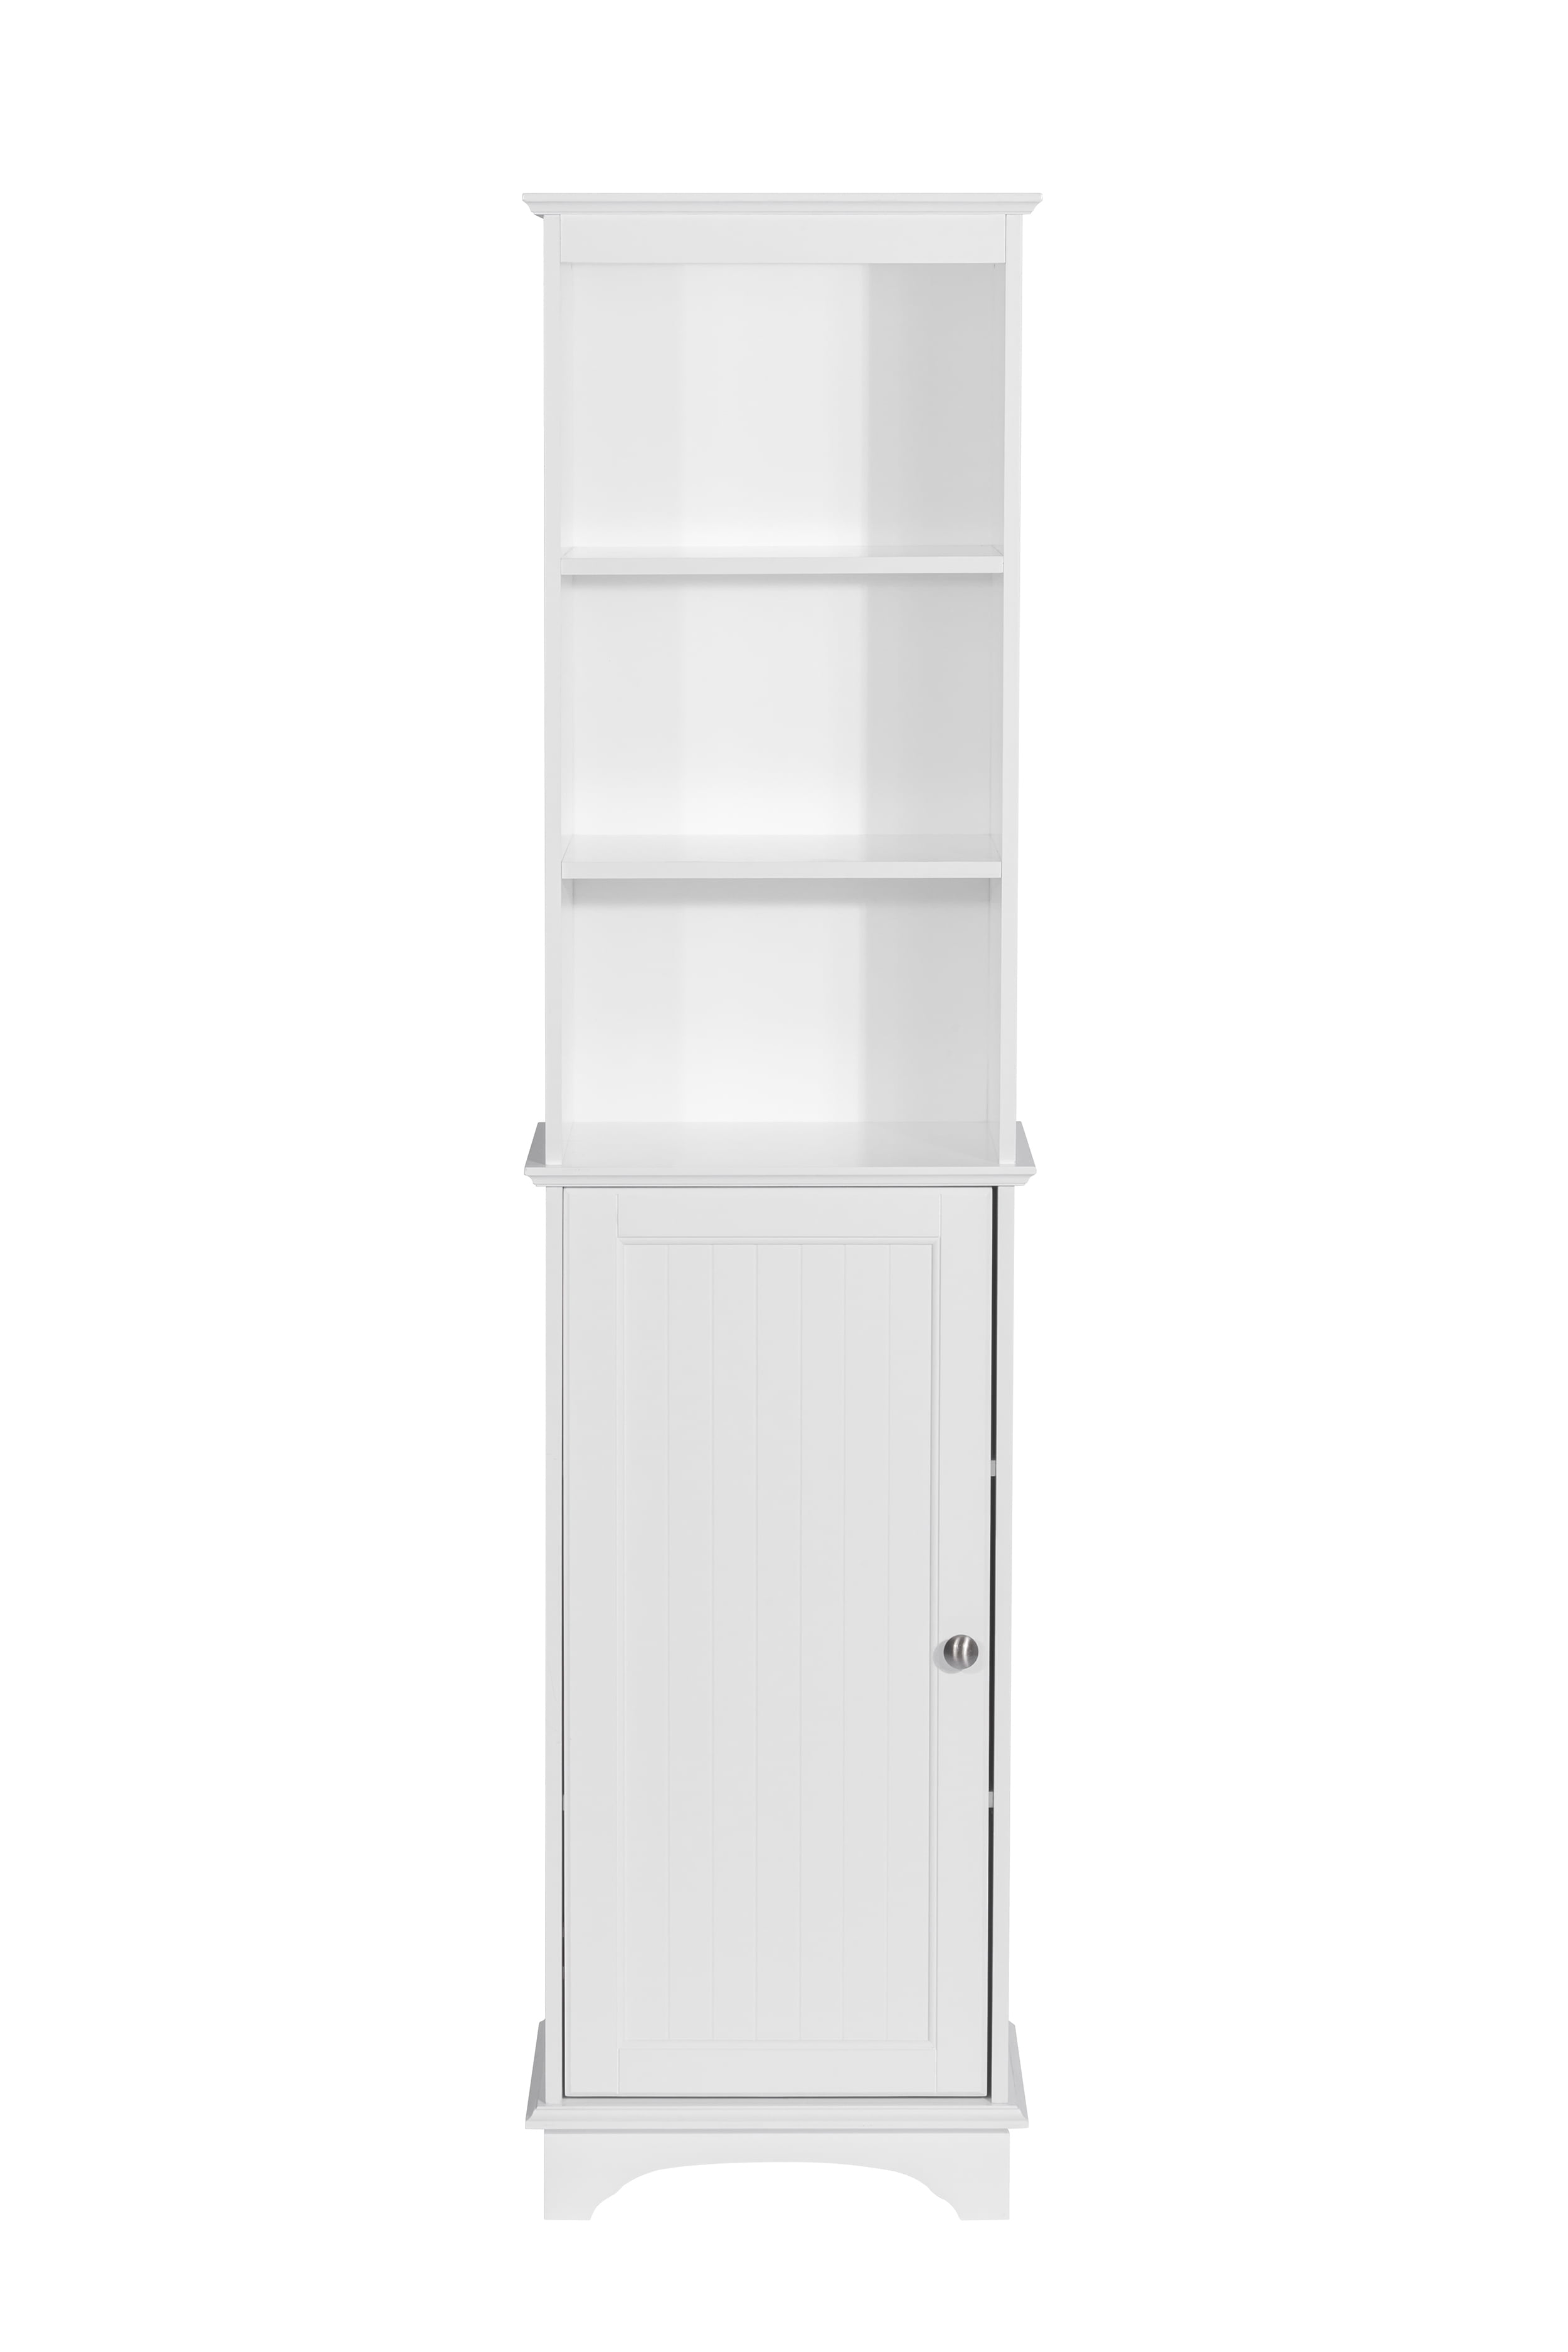 Spirich Home Tall Narrow Storage Cabinet, Bathroom Floor Slim Cabinet with  Windowpane Glass Door, Freestanding Linen Tower, White